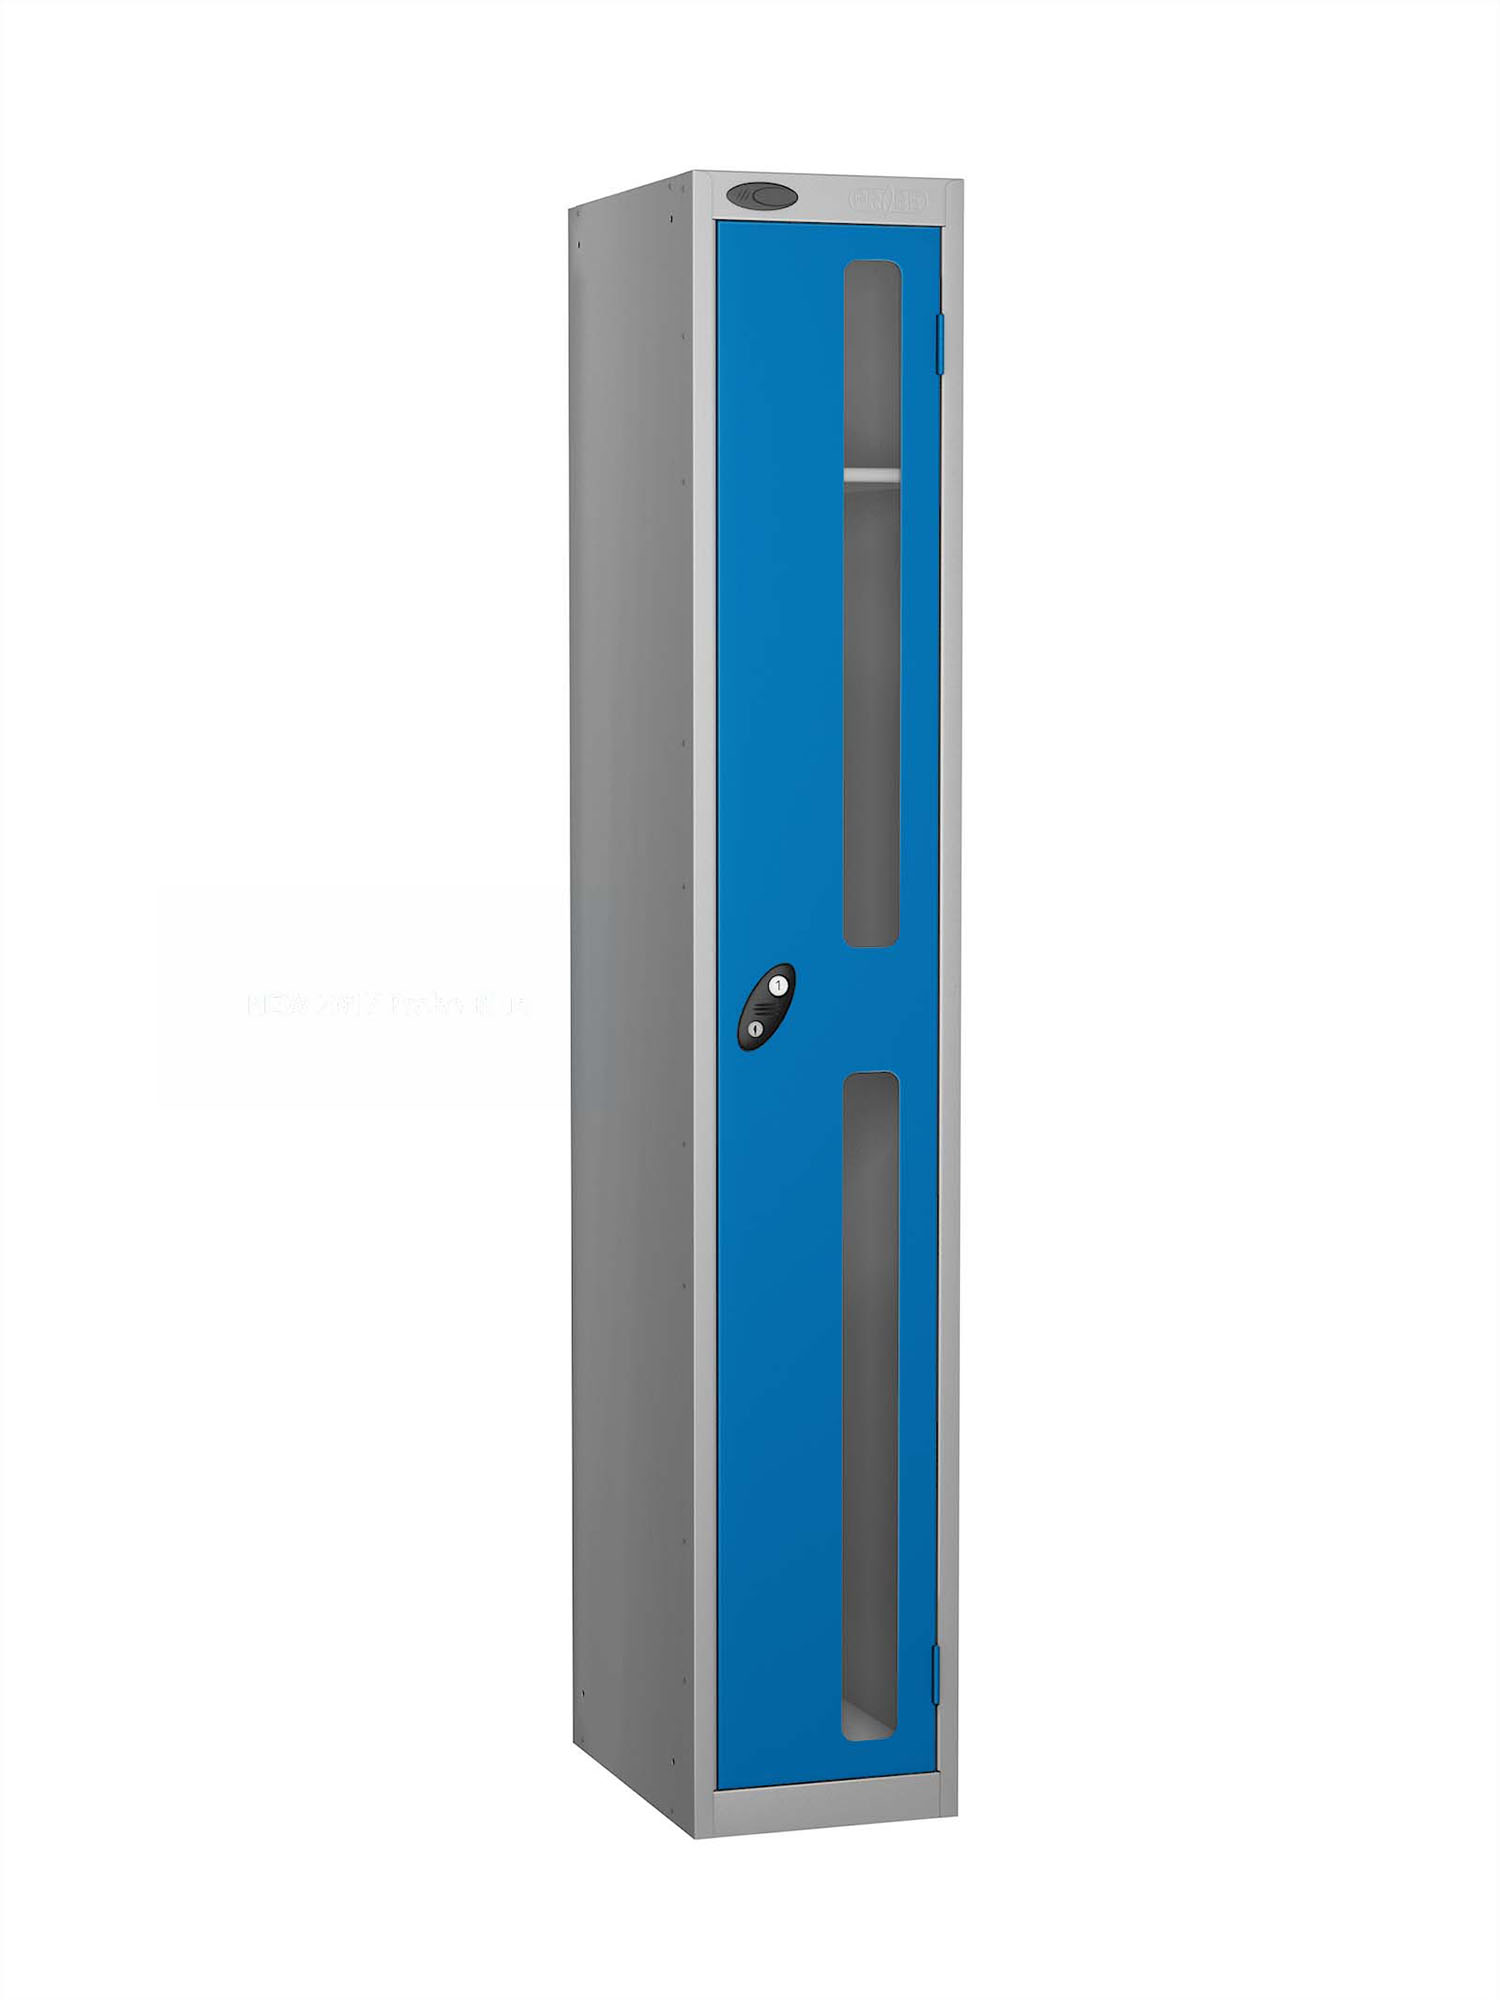 Probe 1 door vision panel anti-stock theft locker blue